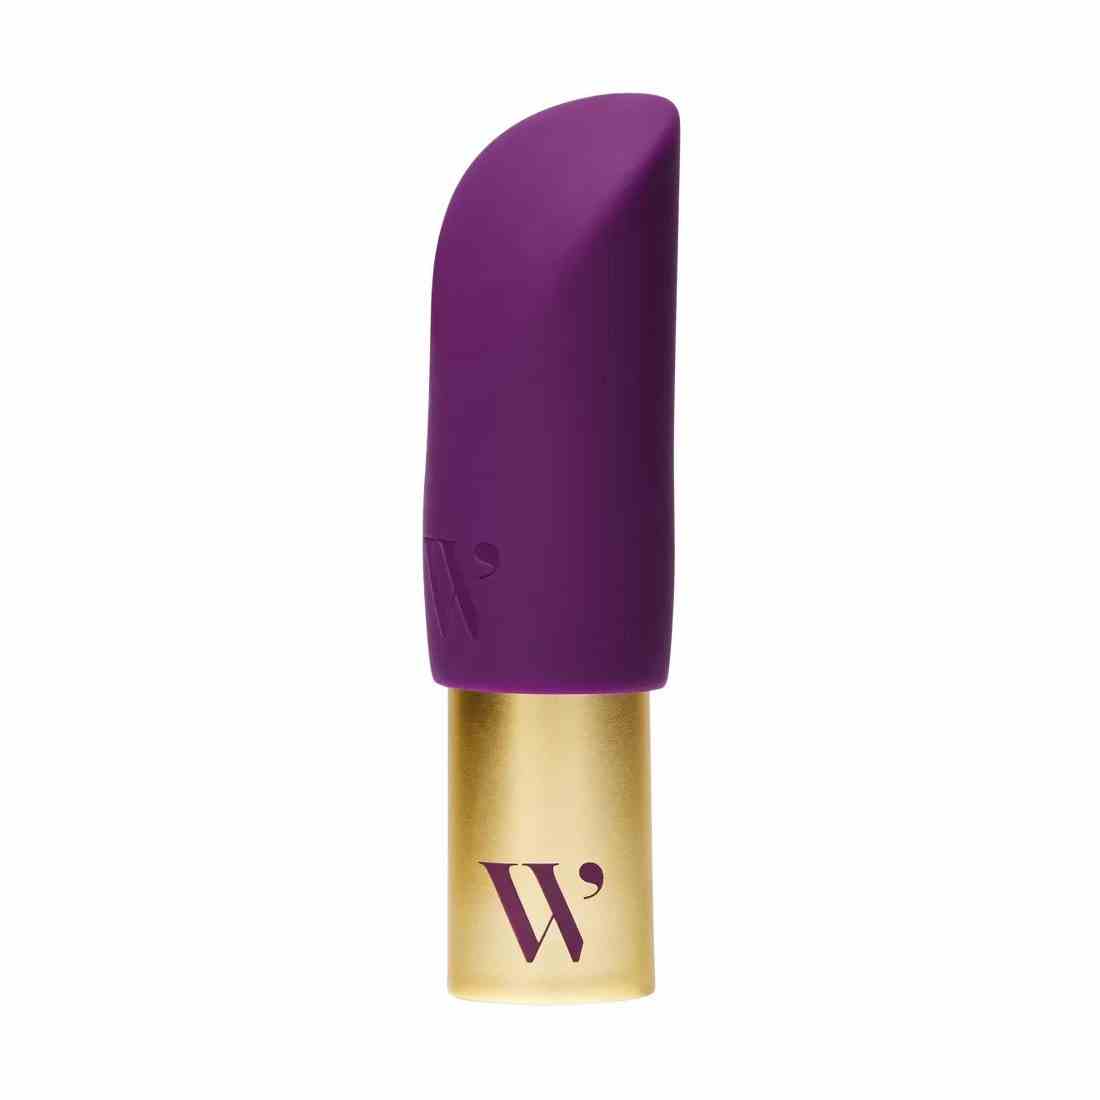 Womaness Gold Vibes stimulierender Silikon-Kugel-Vibrator lila und goldener Vibrator auf weißem Hintergrund